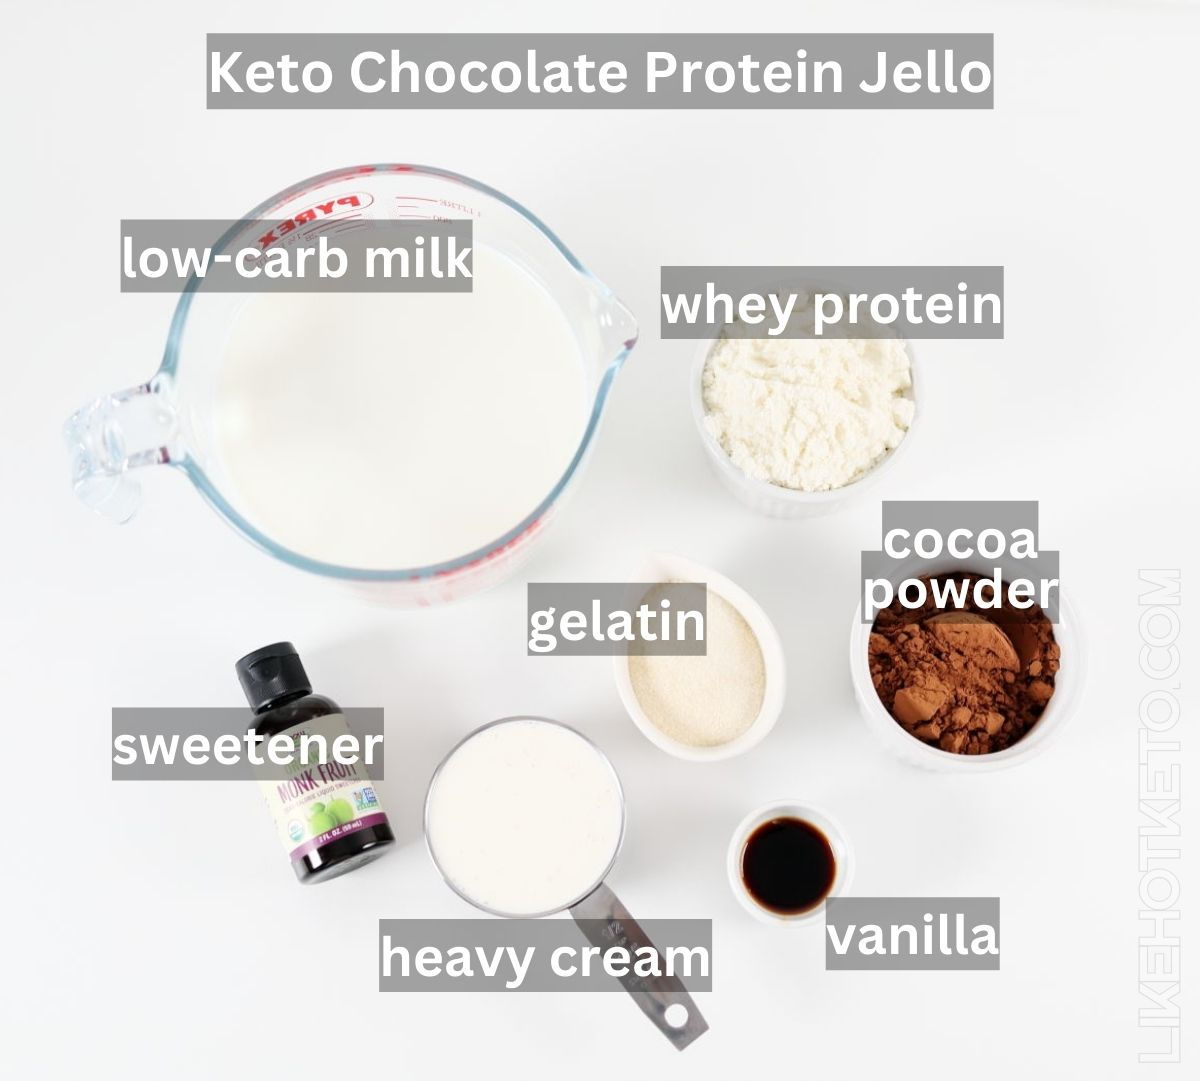 Gathered ingredients for keto chocolate protein jello recipe.